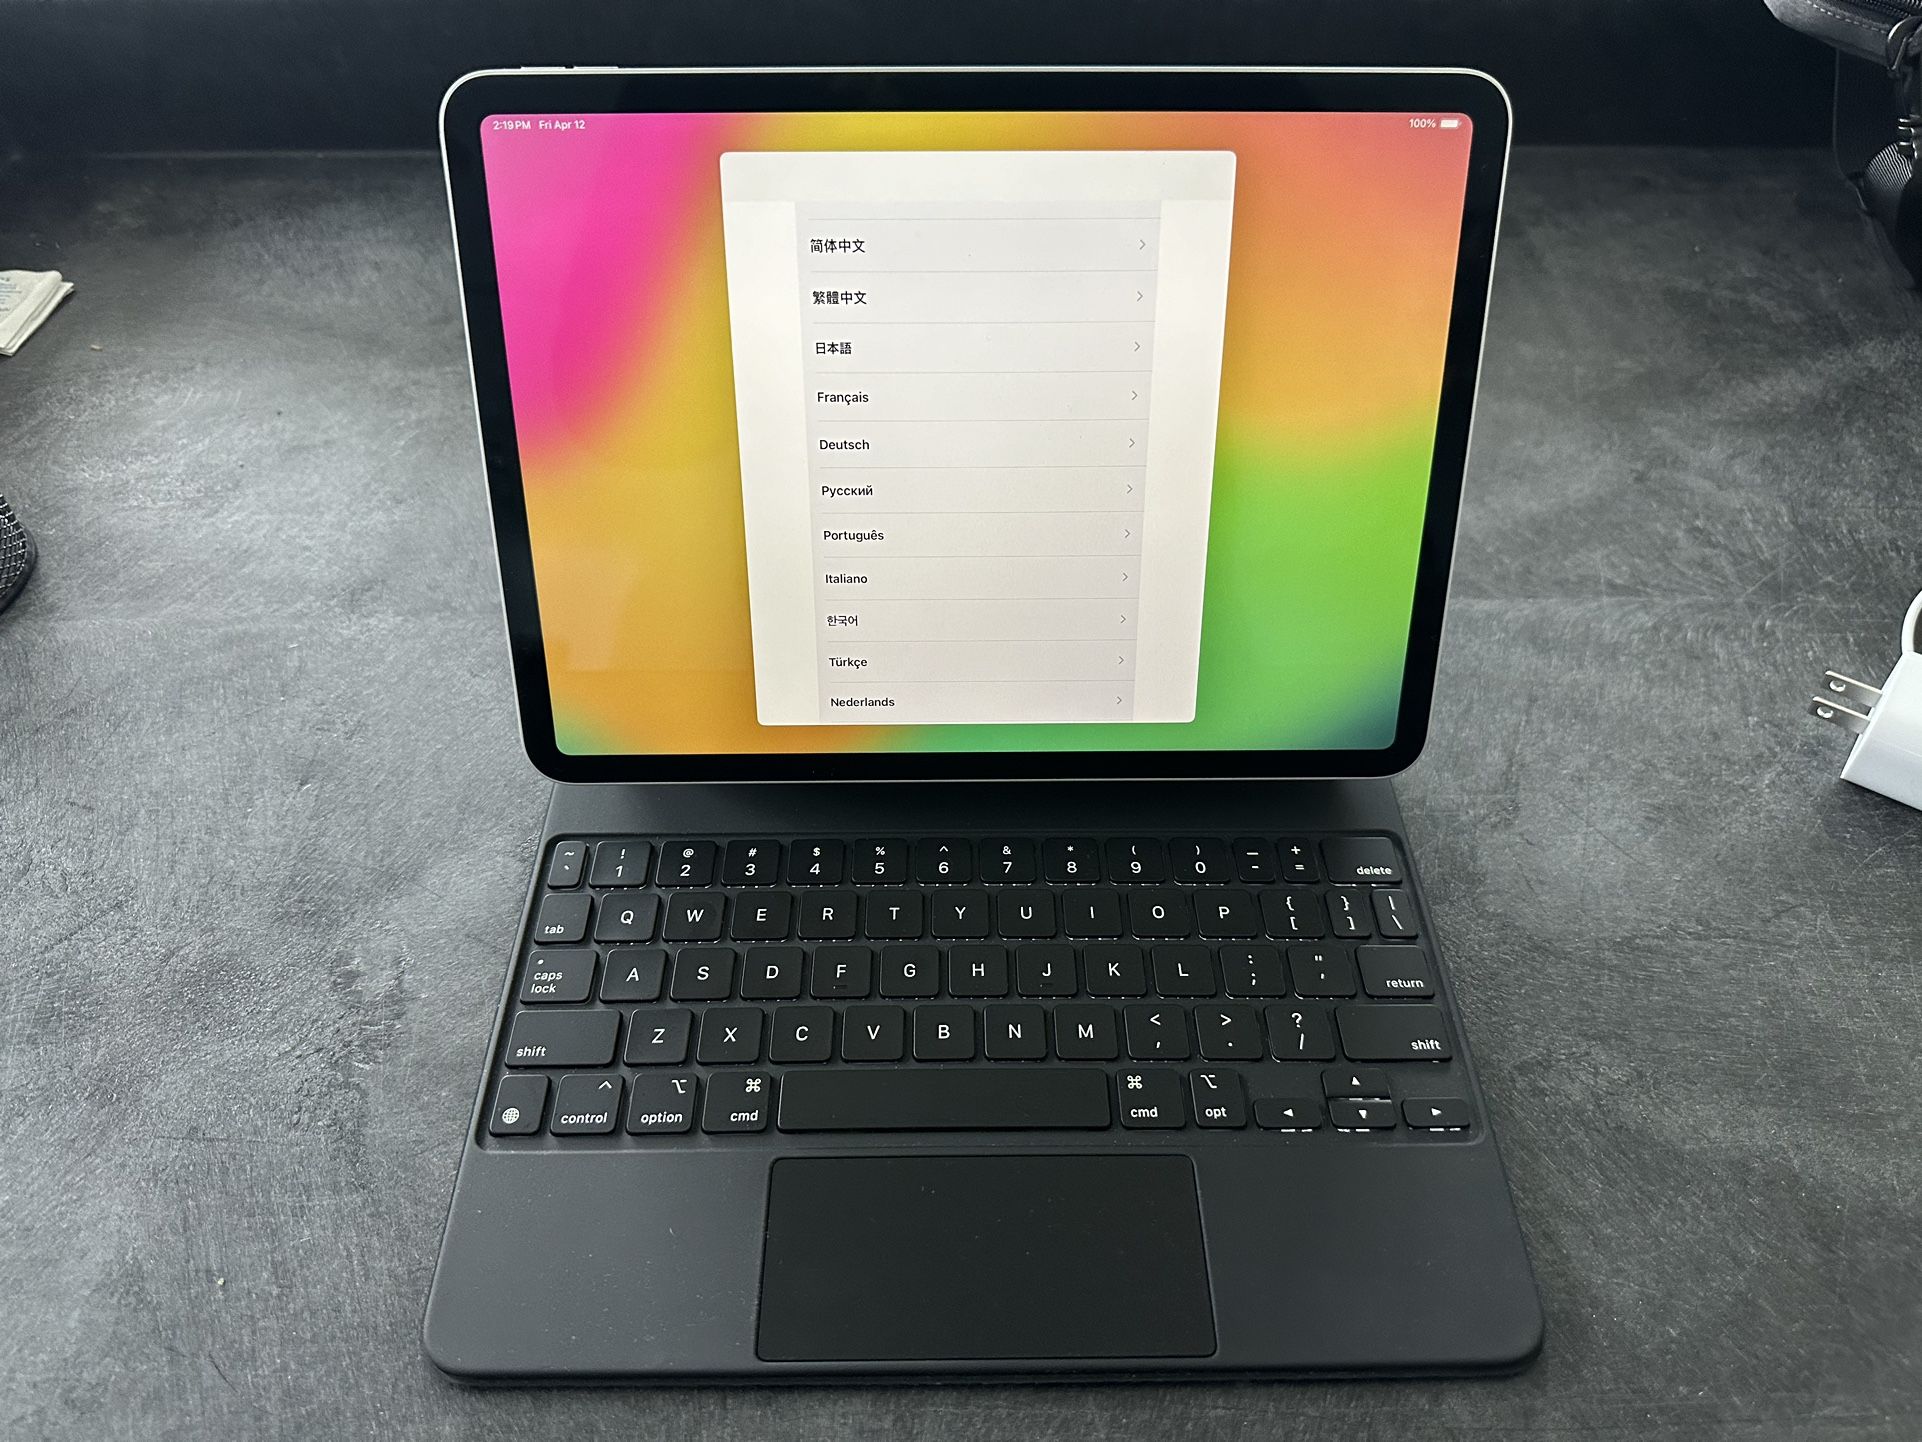 Apple iPad Pro 11 Inch 3rd generation 256GB w/ Magic Keyboard - Brand New! - $650 OBO